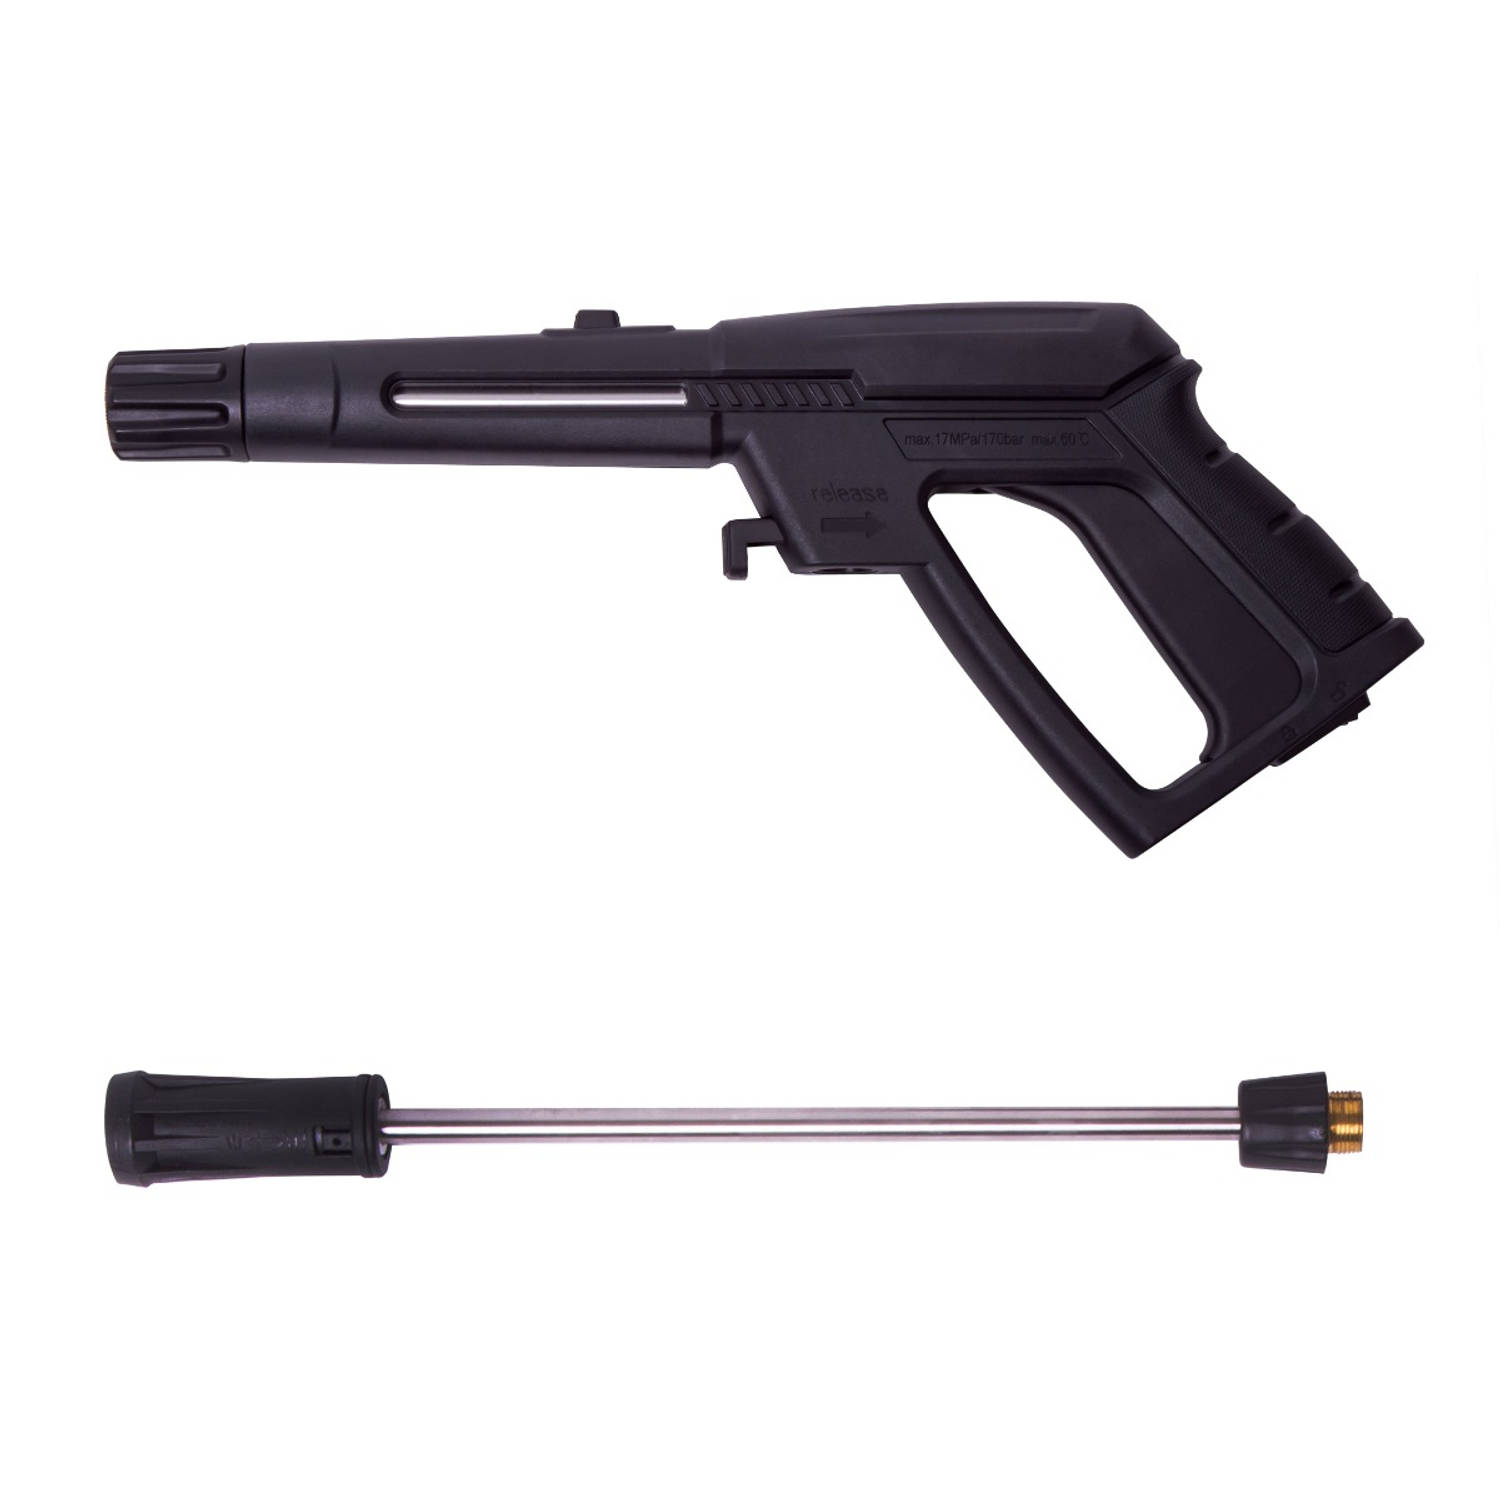 VONROC Spuitpistool en regelbare spuitmond voor hogedrukreiniger – Max. 200 bar - Voor V22 & V25 hogedrukreinigers